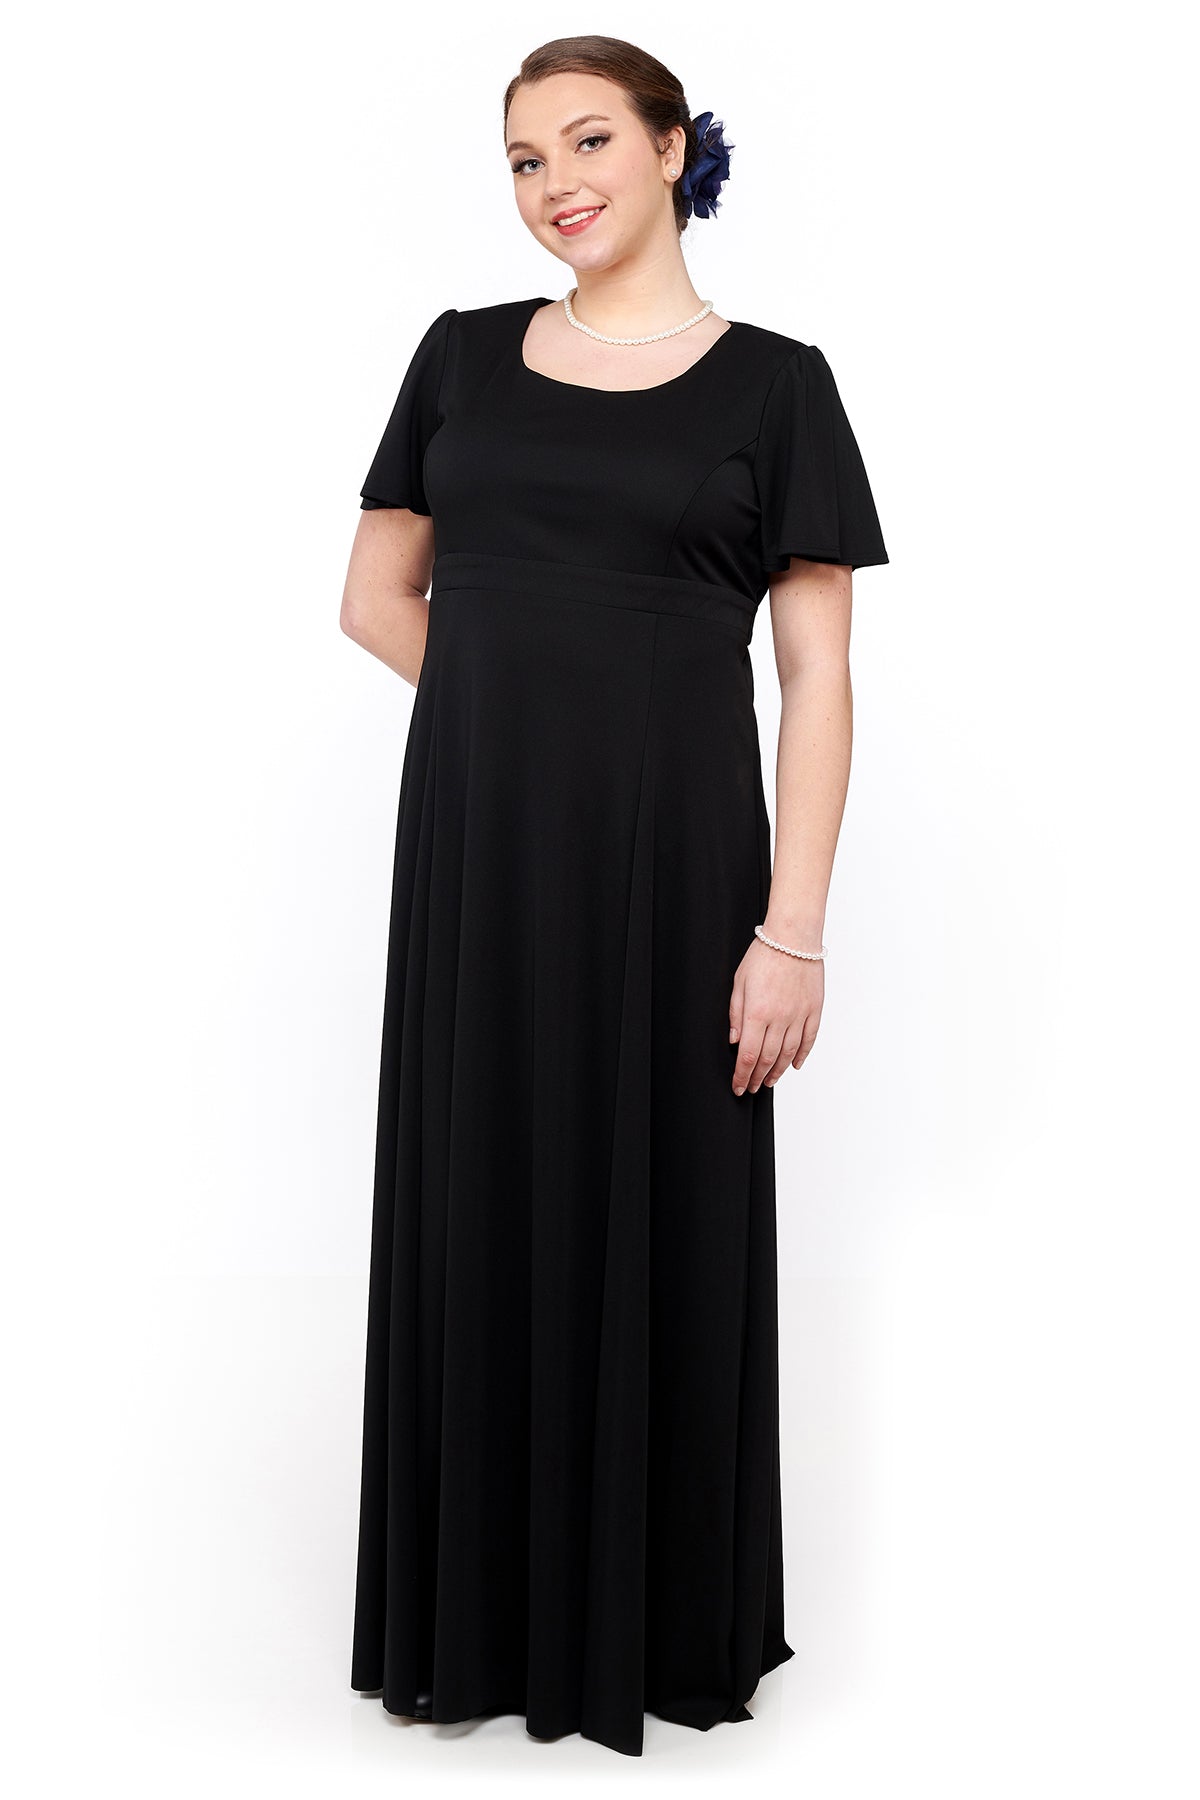 CHRISTINA (Style #119) - Flutter Sleeve Scoop Neckline Dress